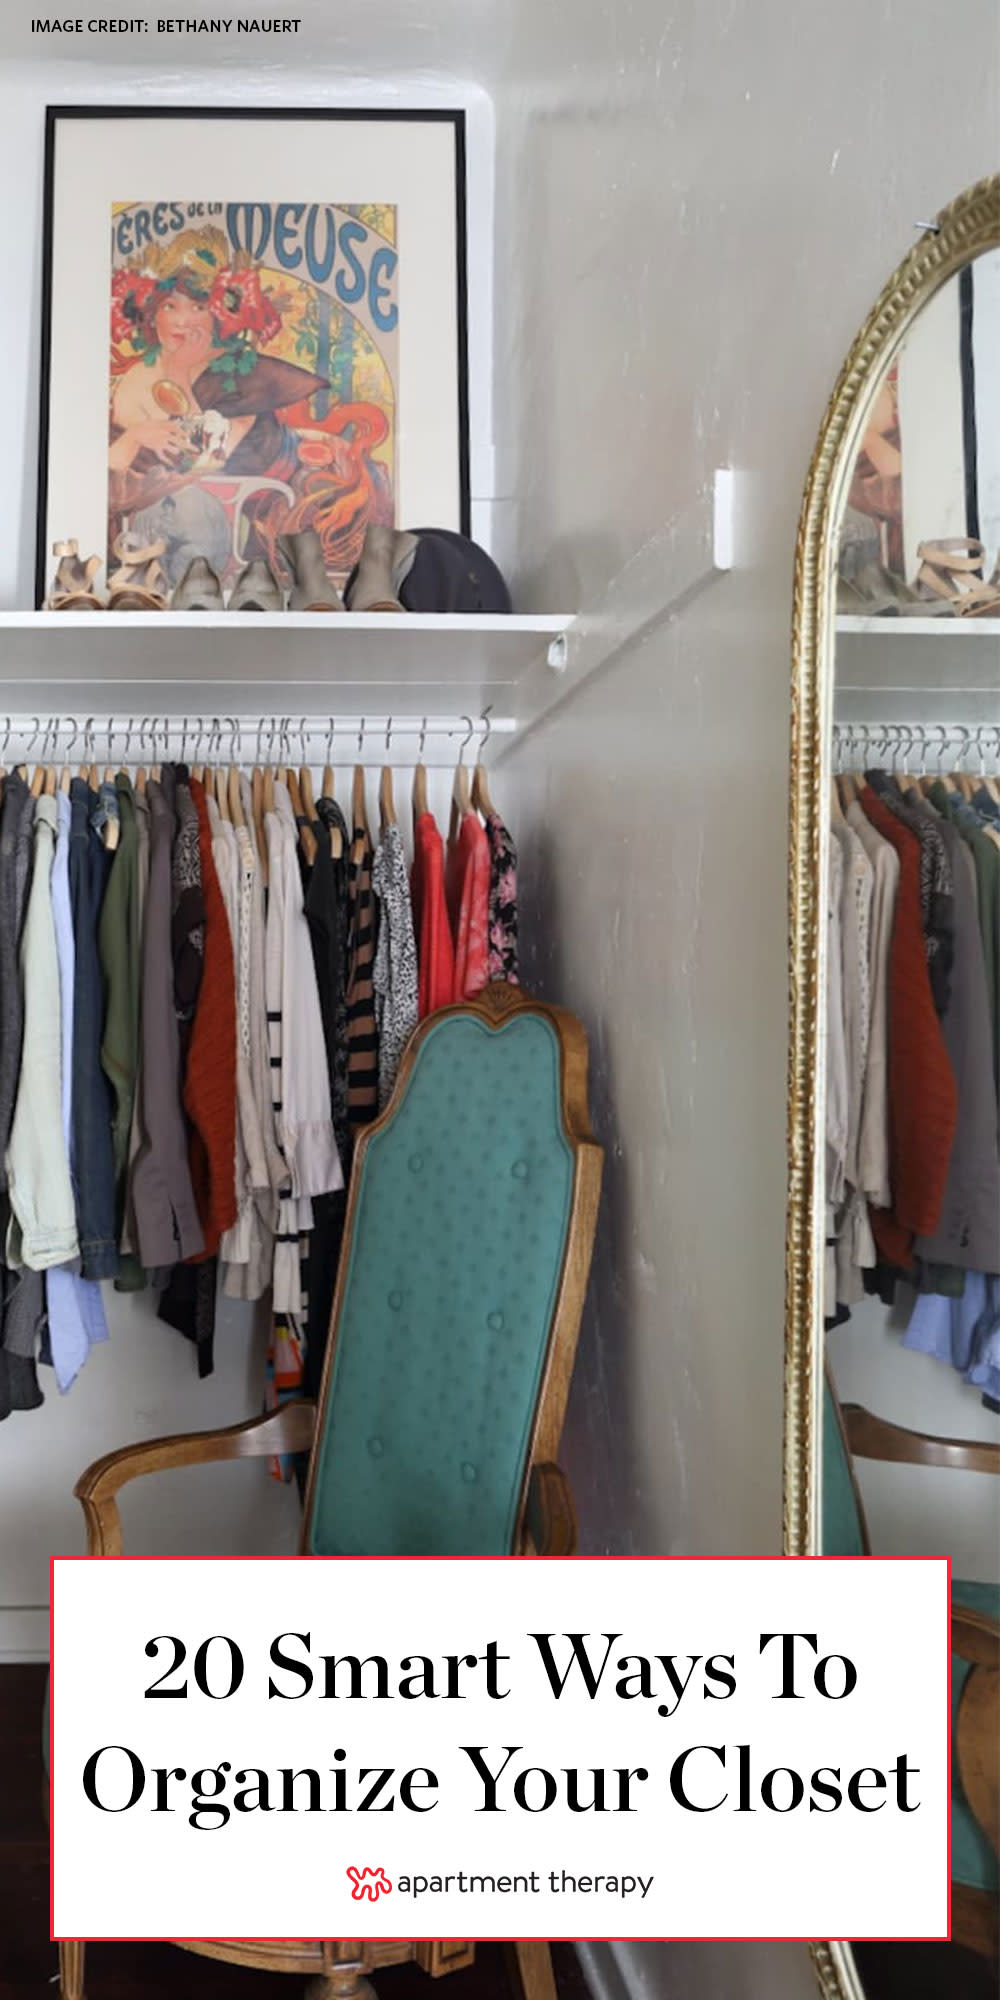 How can I make my closet look nice